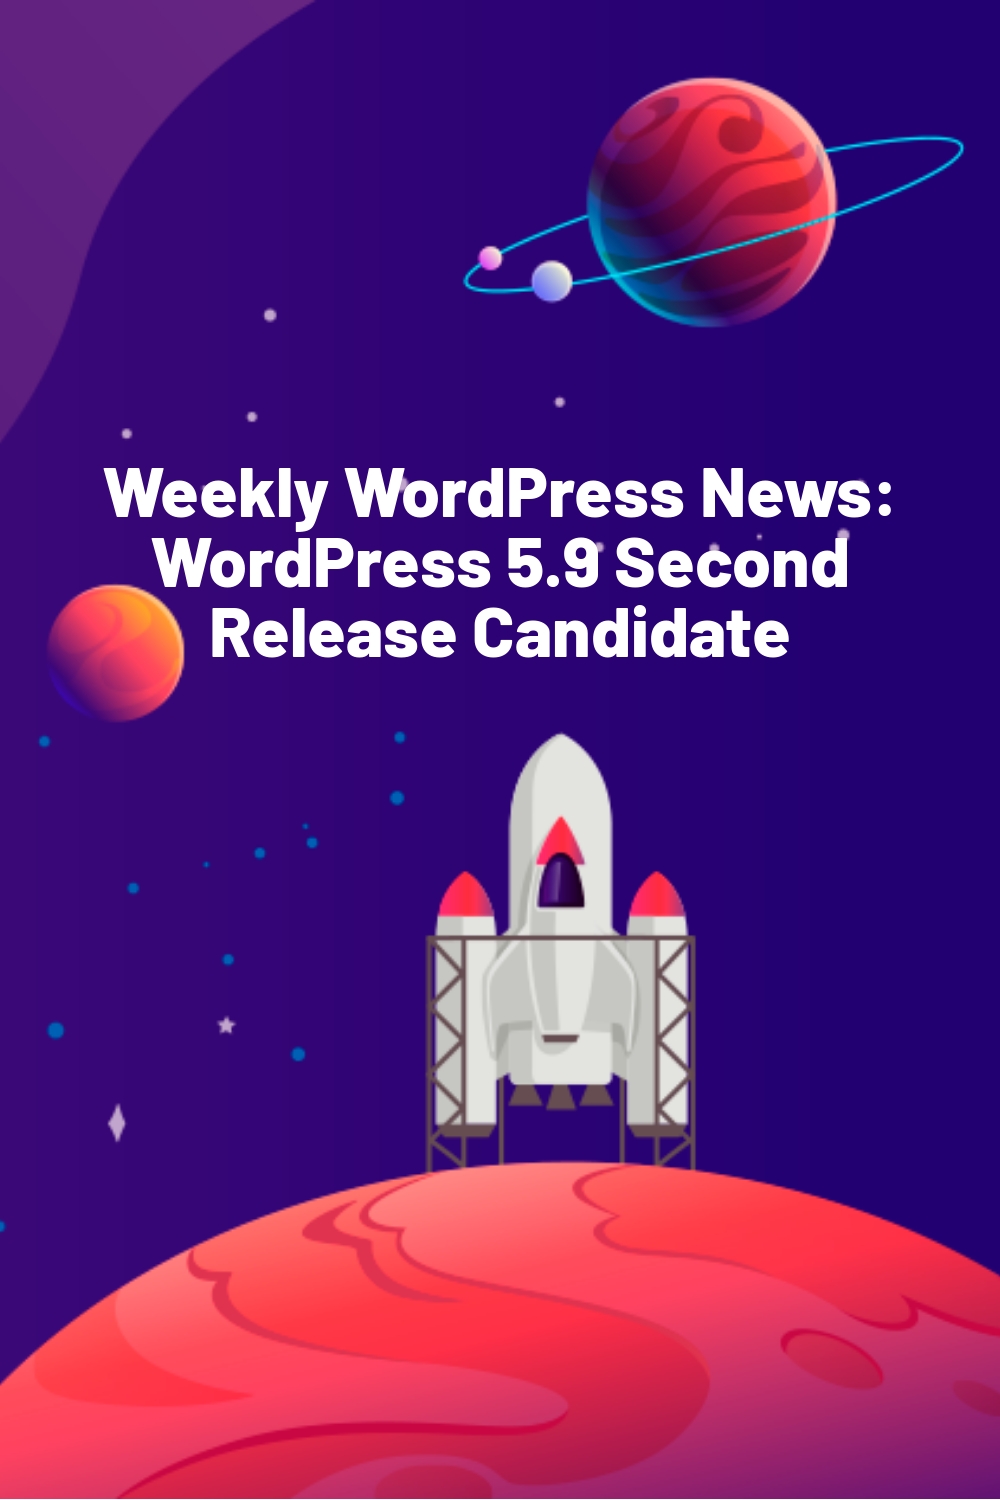 Weekly WordPress News: WordPress 5.9 Second Release Candidate